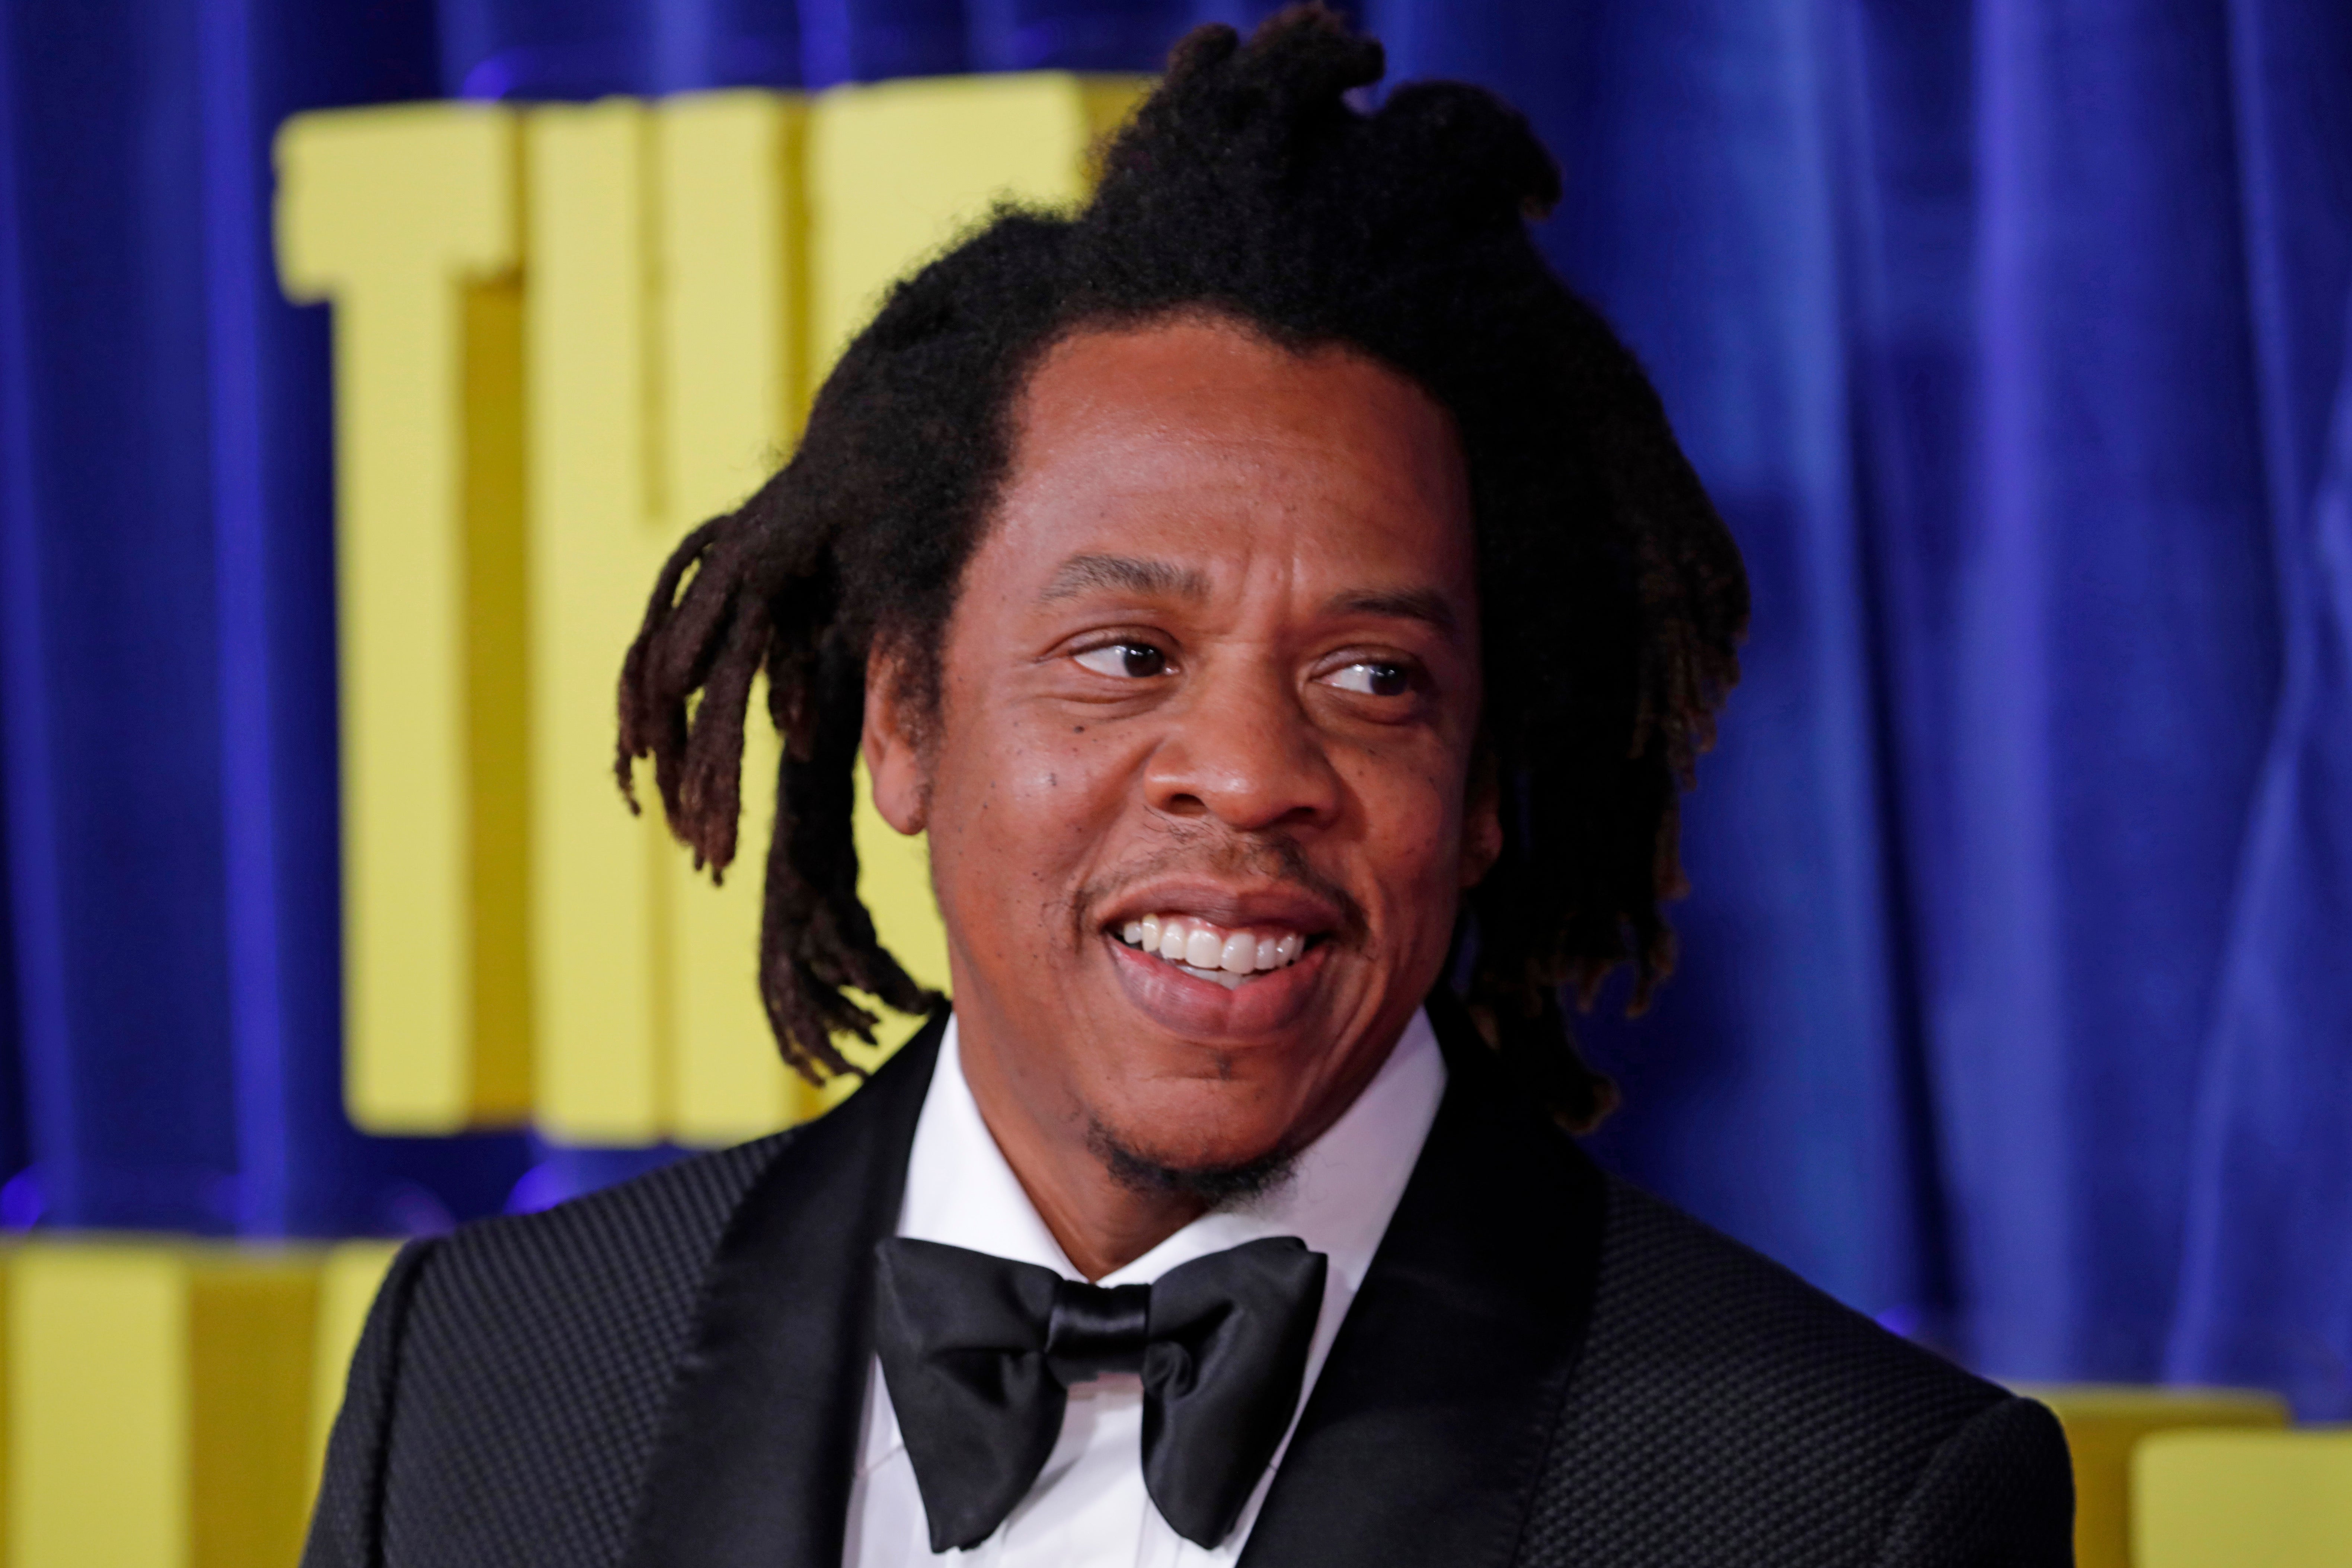 Diddy x Jay Z 2022 Oscars - According 2 Hip-Hop